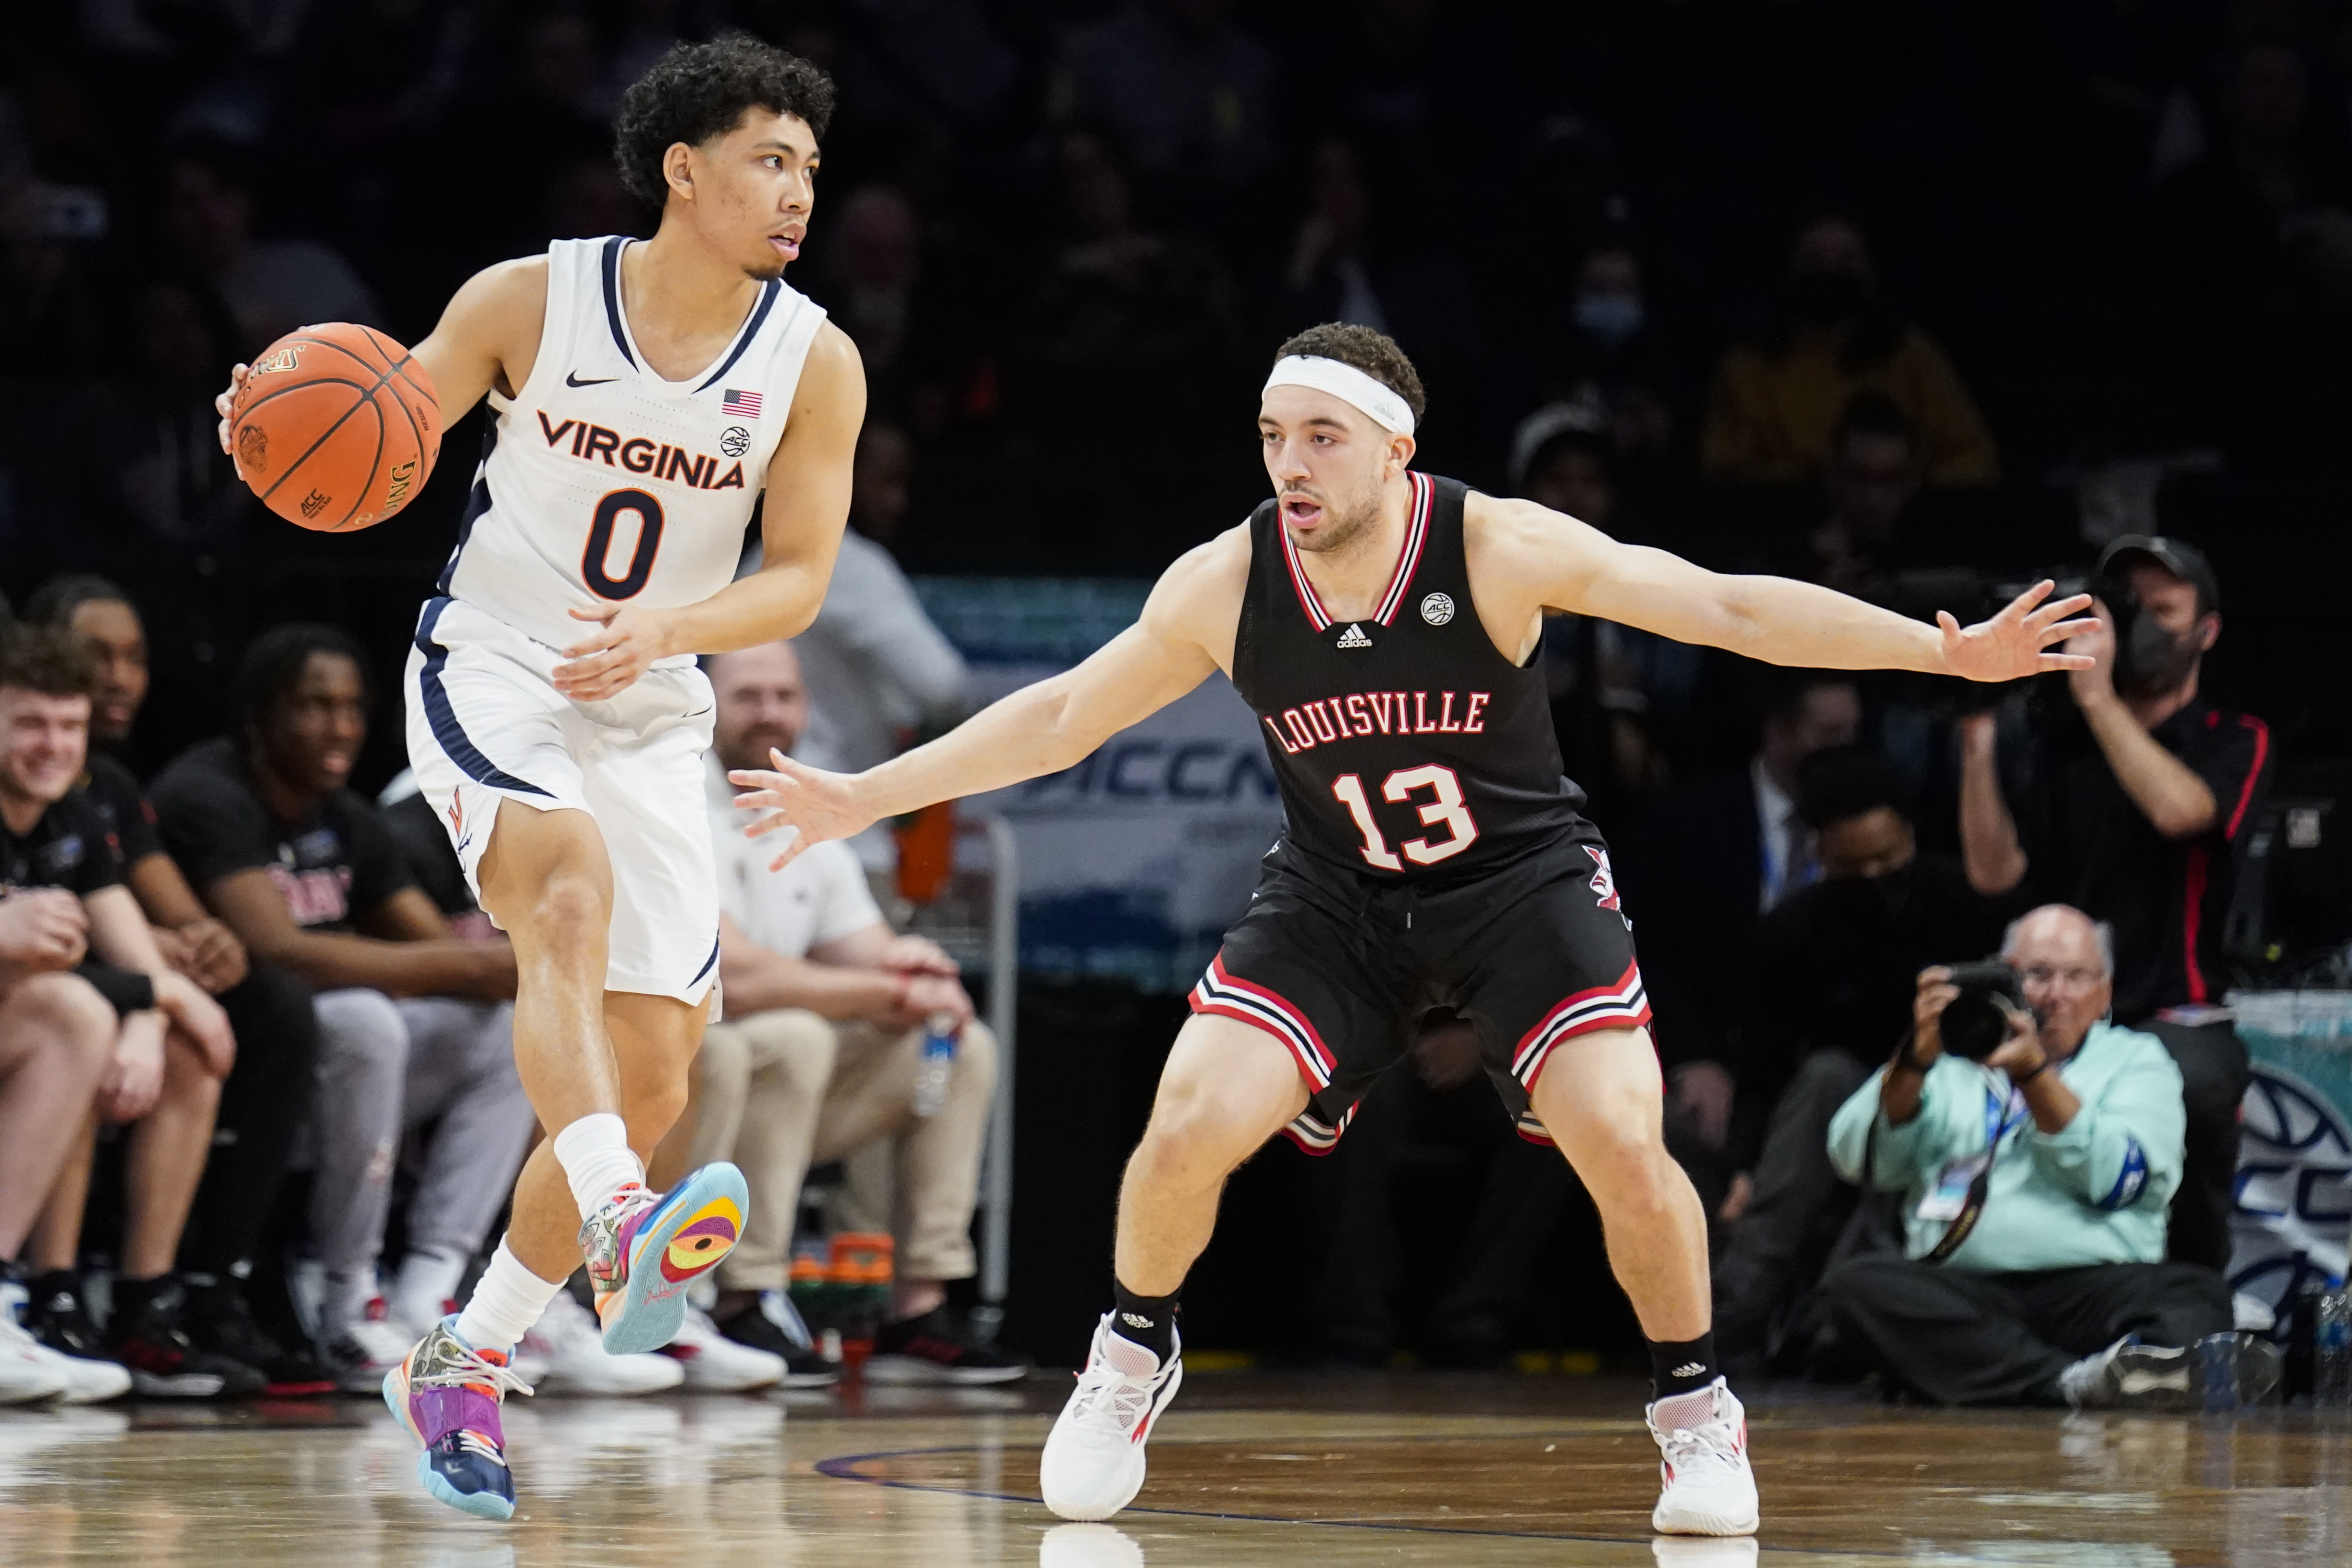 Virginia defeats Louisville 51-50 in ACC Men's Basketball Tournament